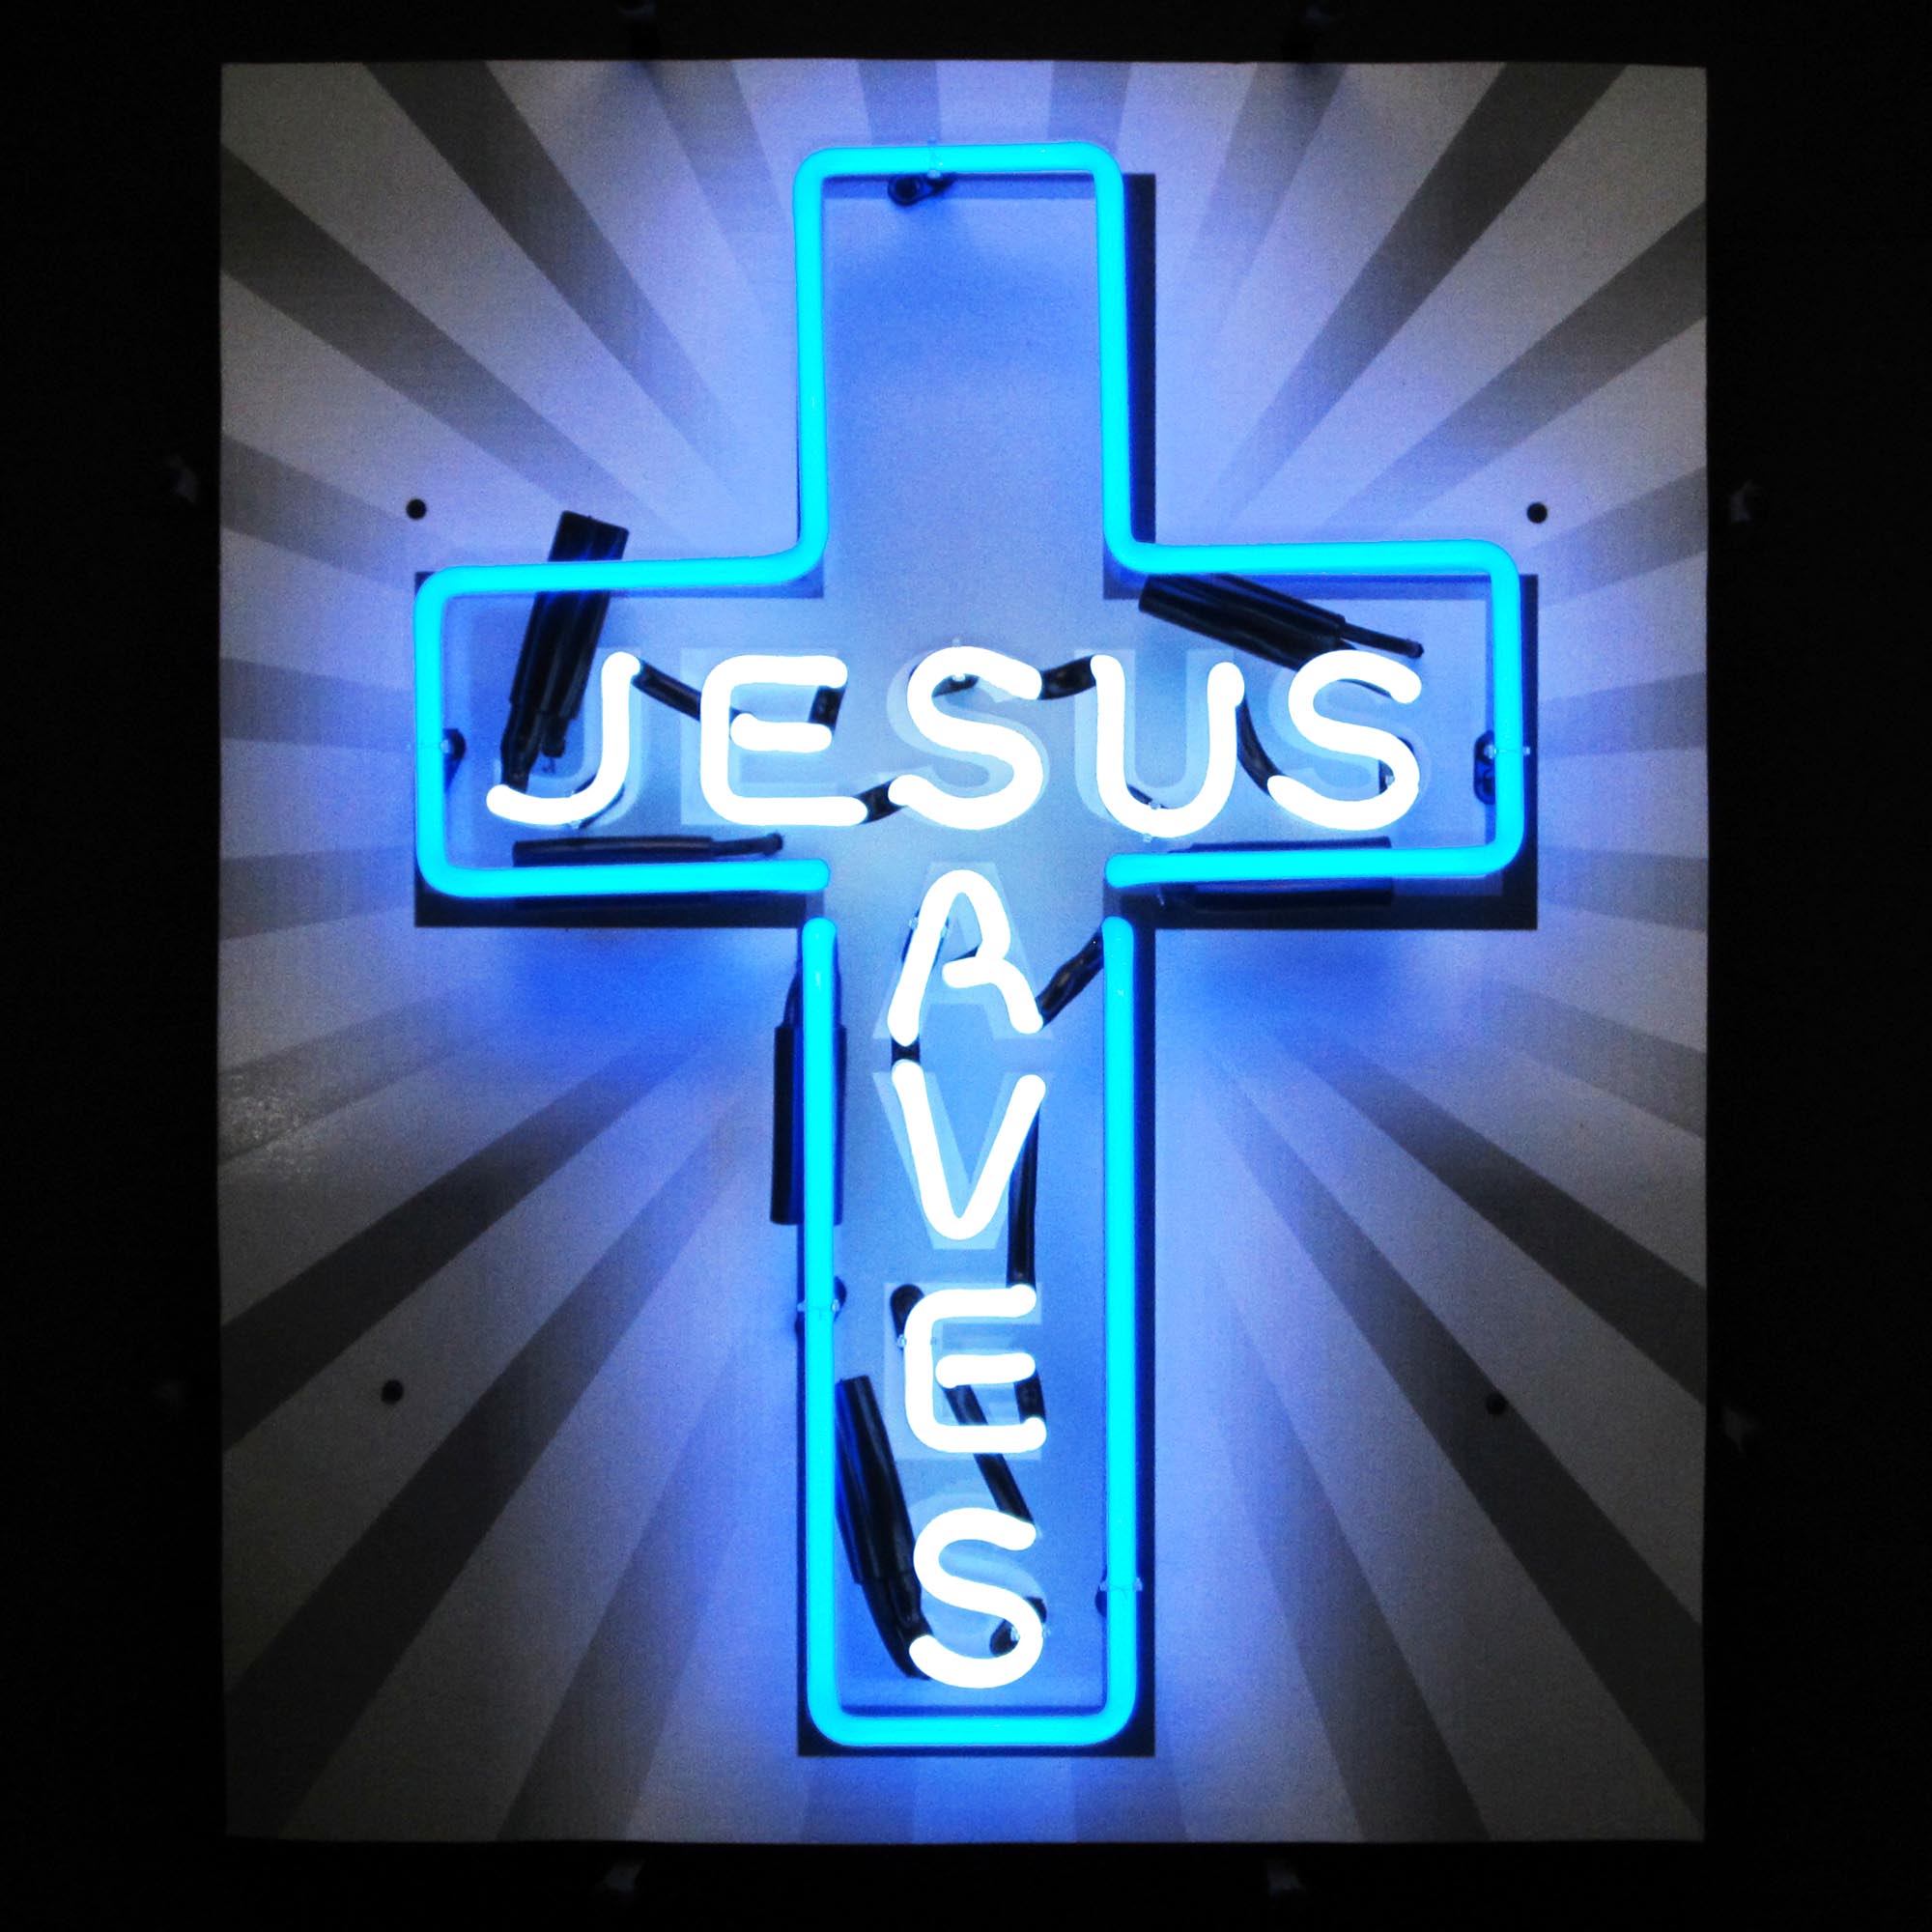 Jesus Saves Neon Sign